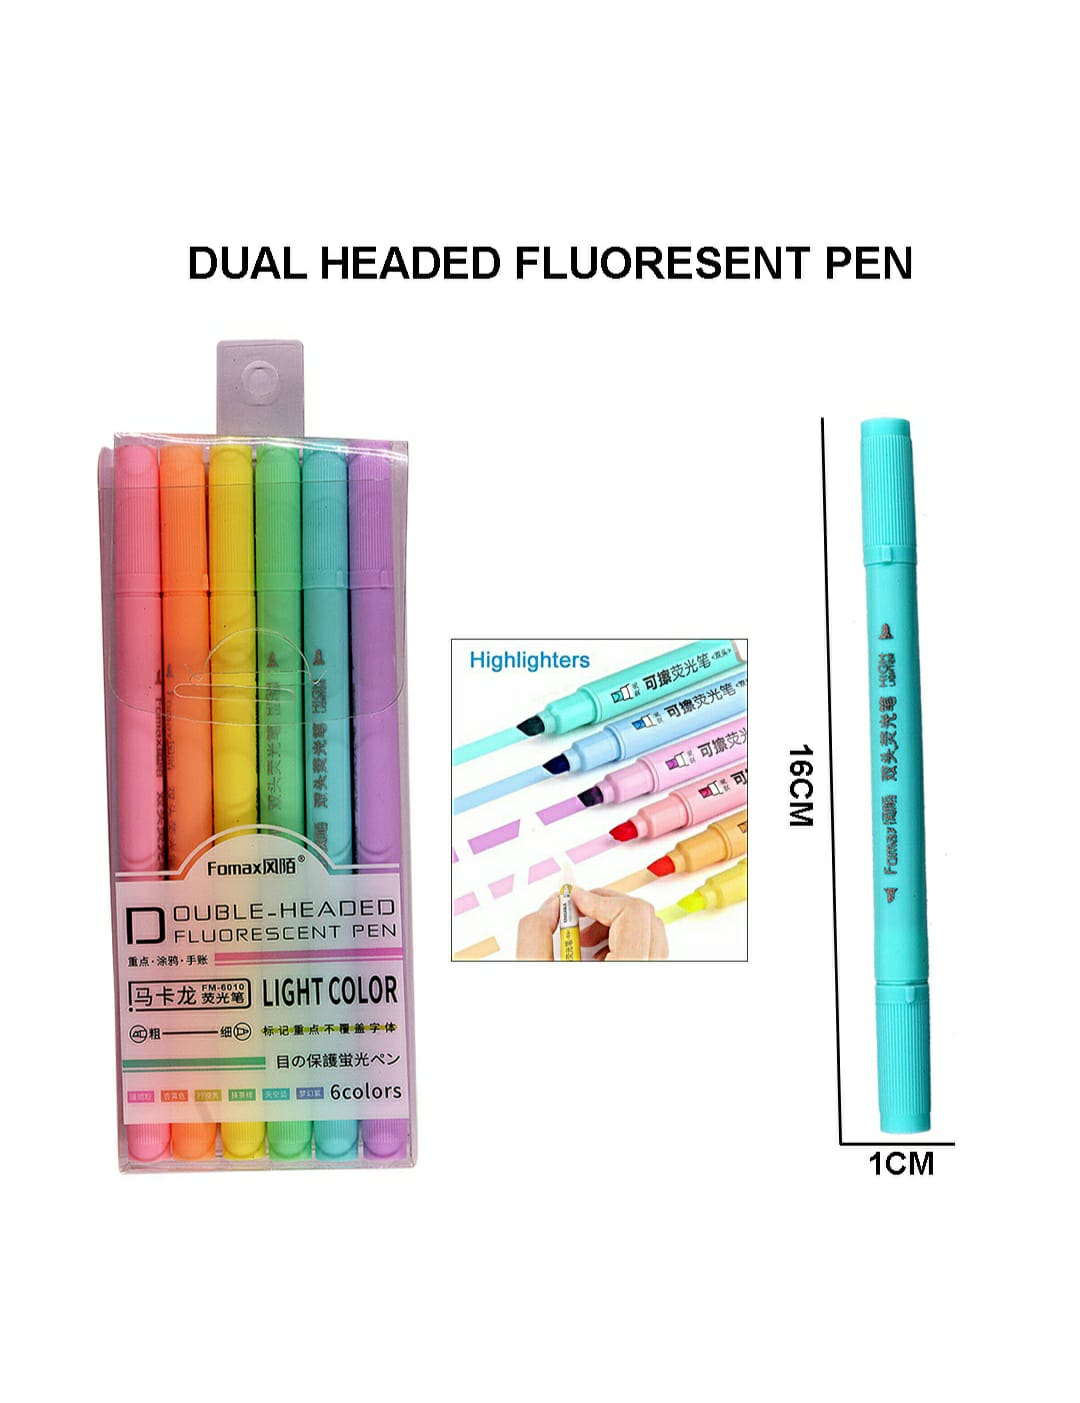 Dual Headed Fluoresent Pen Fm-6010 | INKARTO